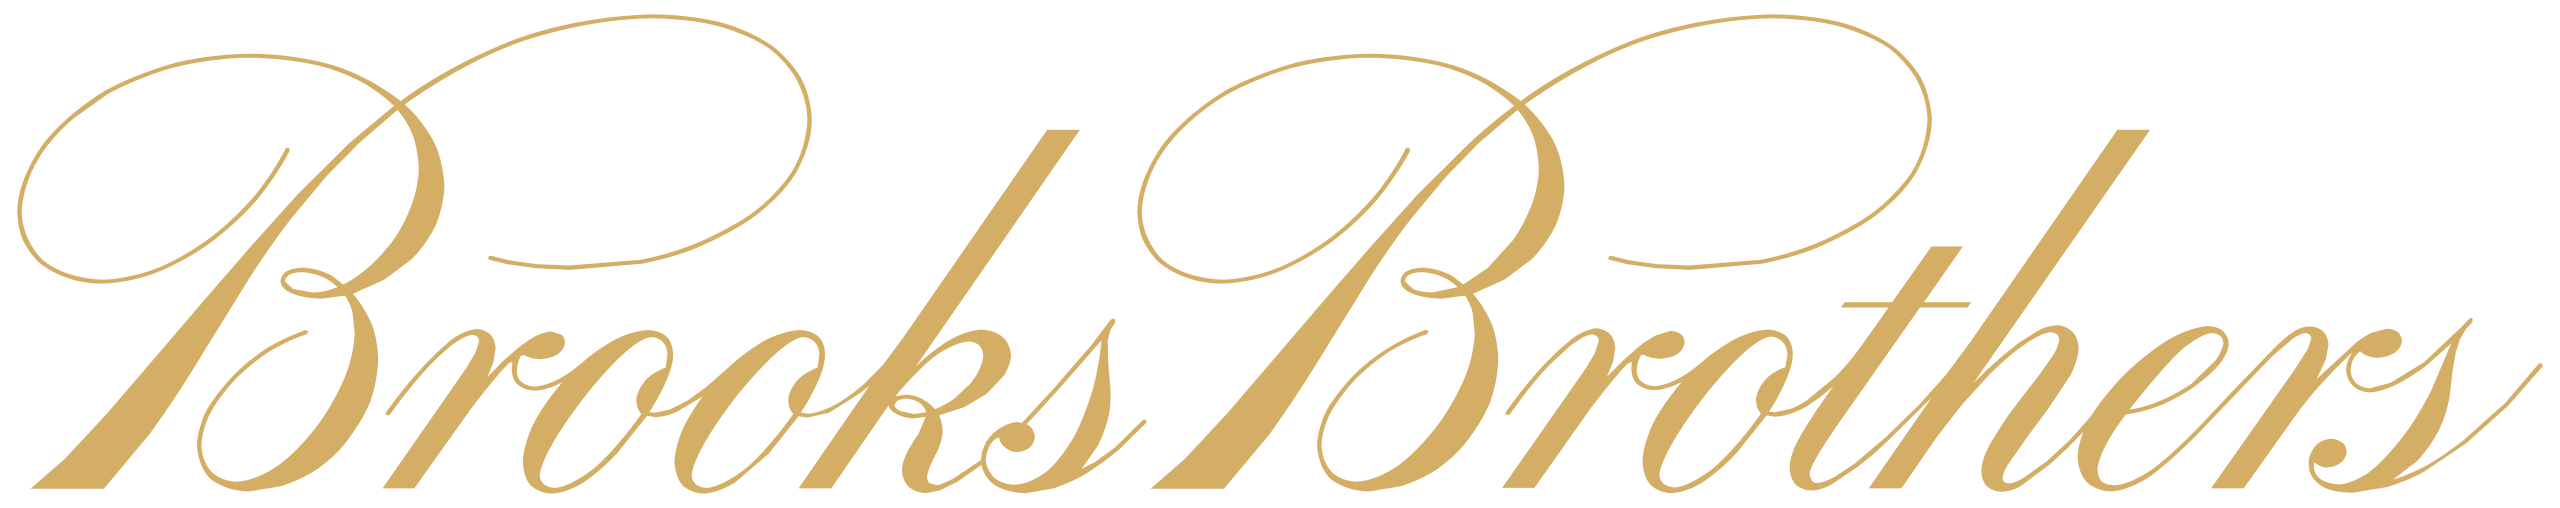 File:Brooks Brothers logo.svg - Wikimedia Commons